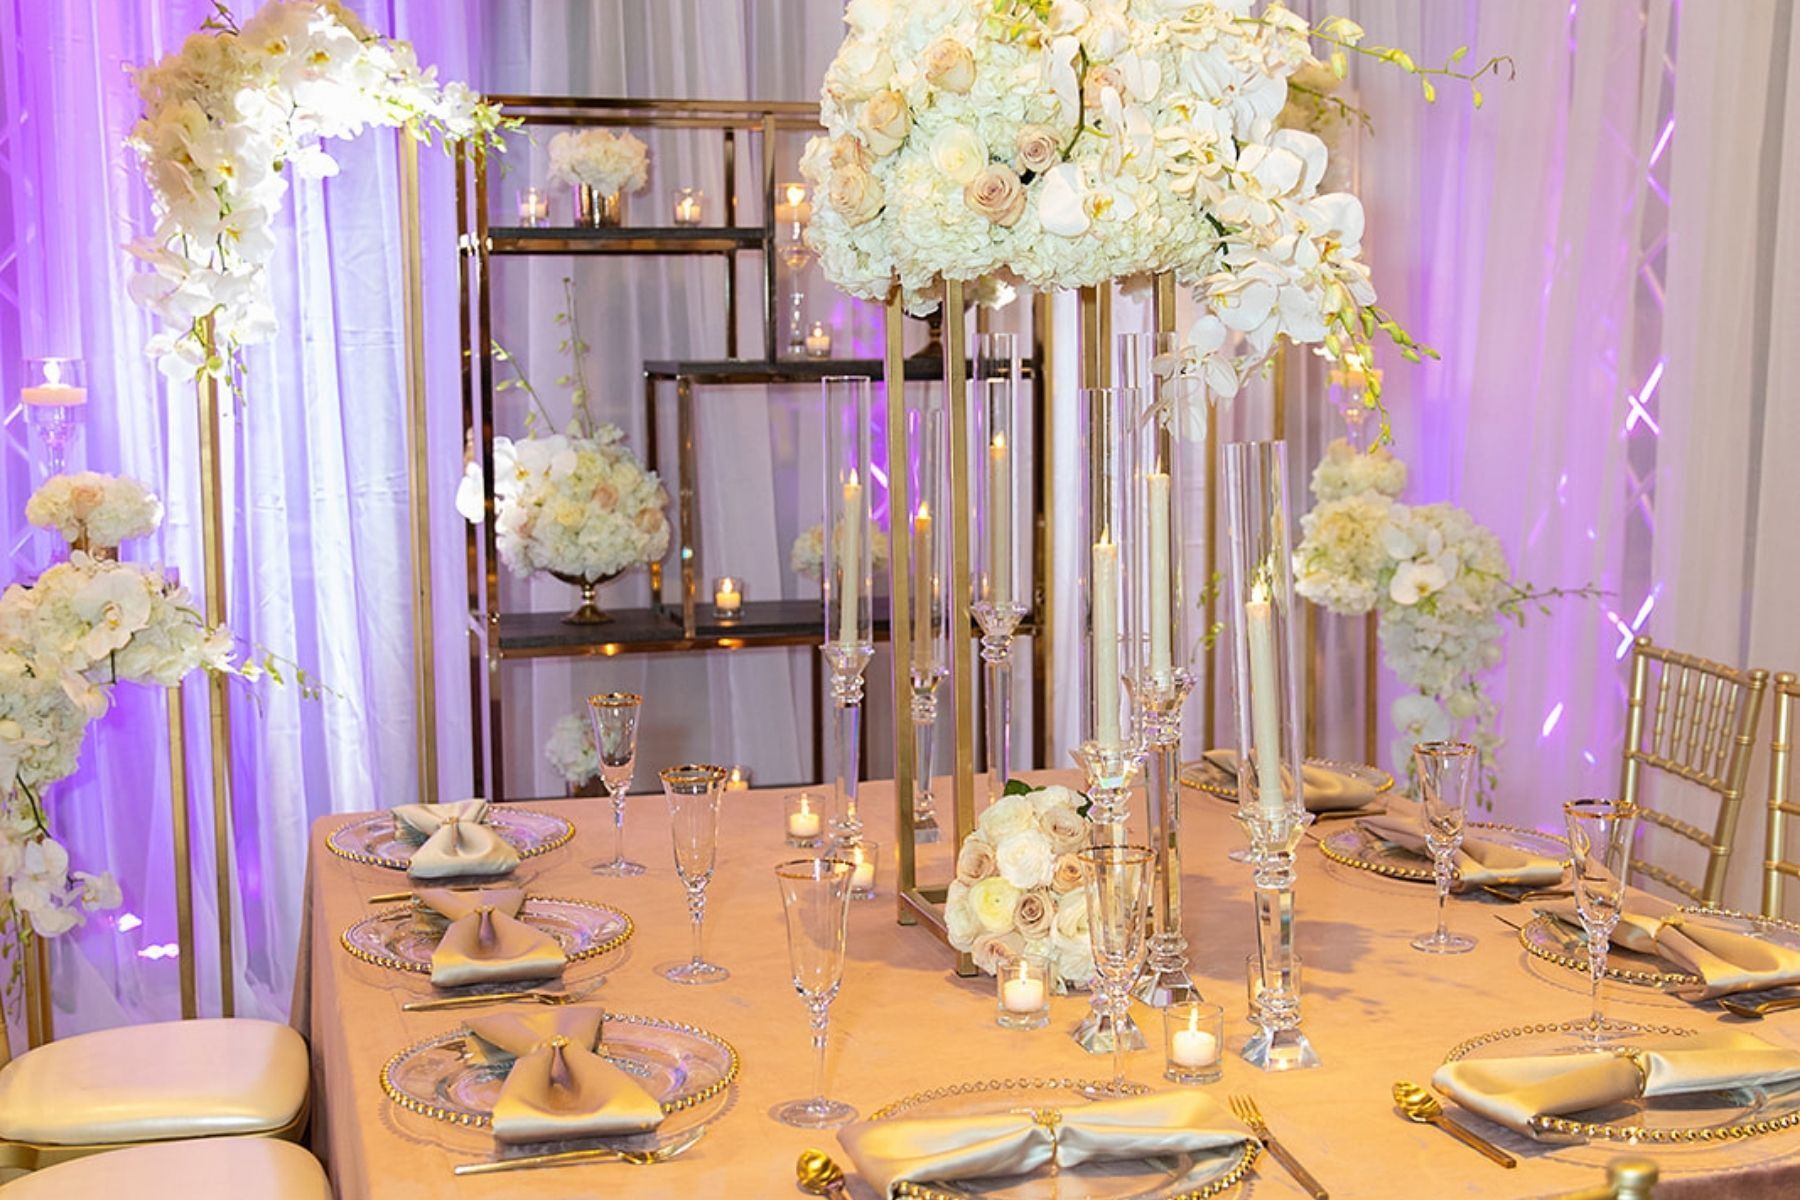 sacramento wedding decor, table and centerpieces, wedding flowers, table settings